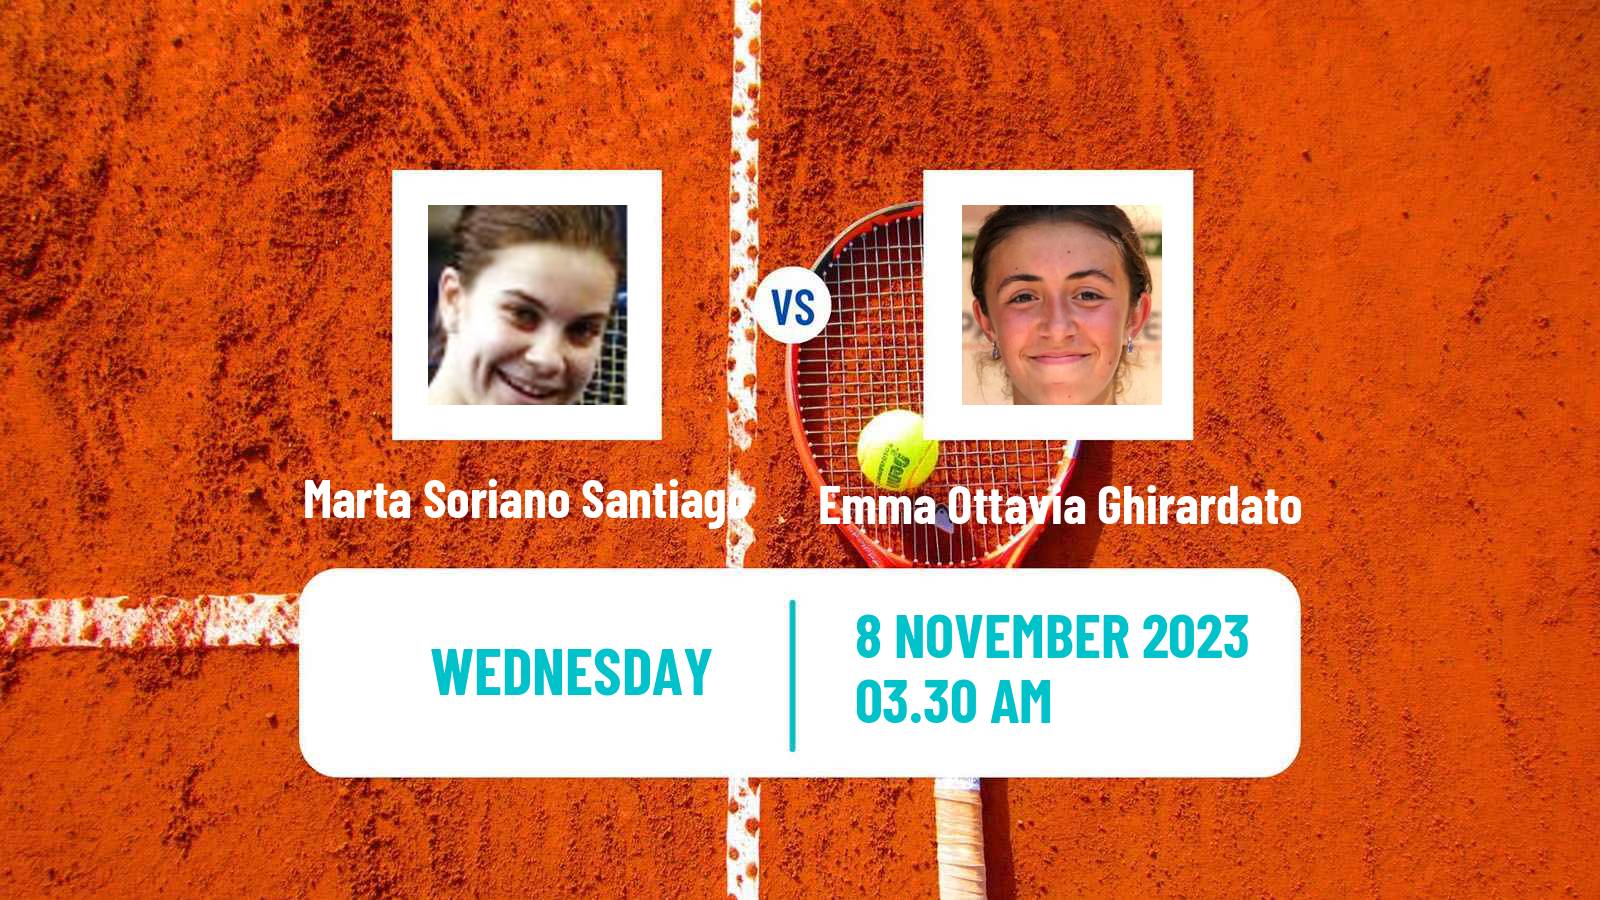 Tennis ITF W15 Monastir 39 Women Marta Soriano Santiago - Emma Ottavia Ghirardato